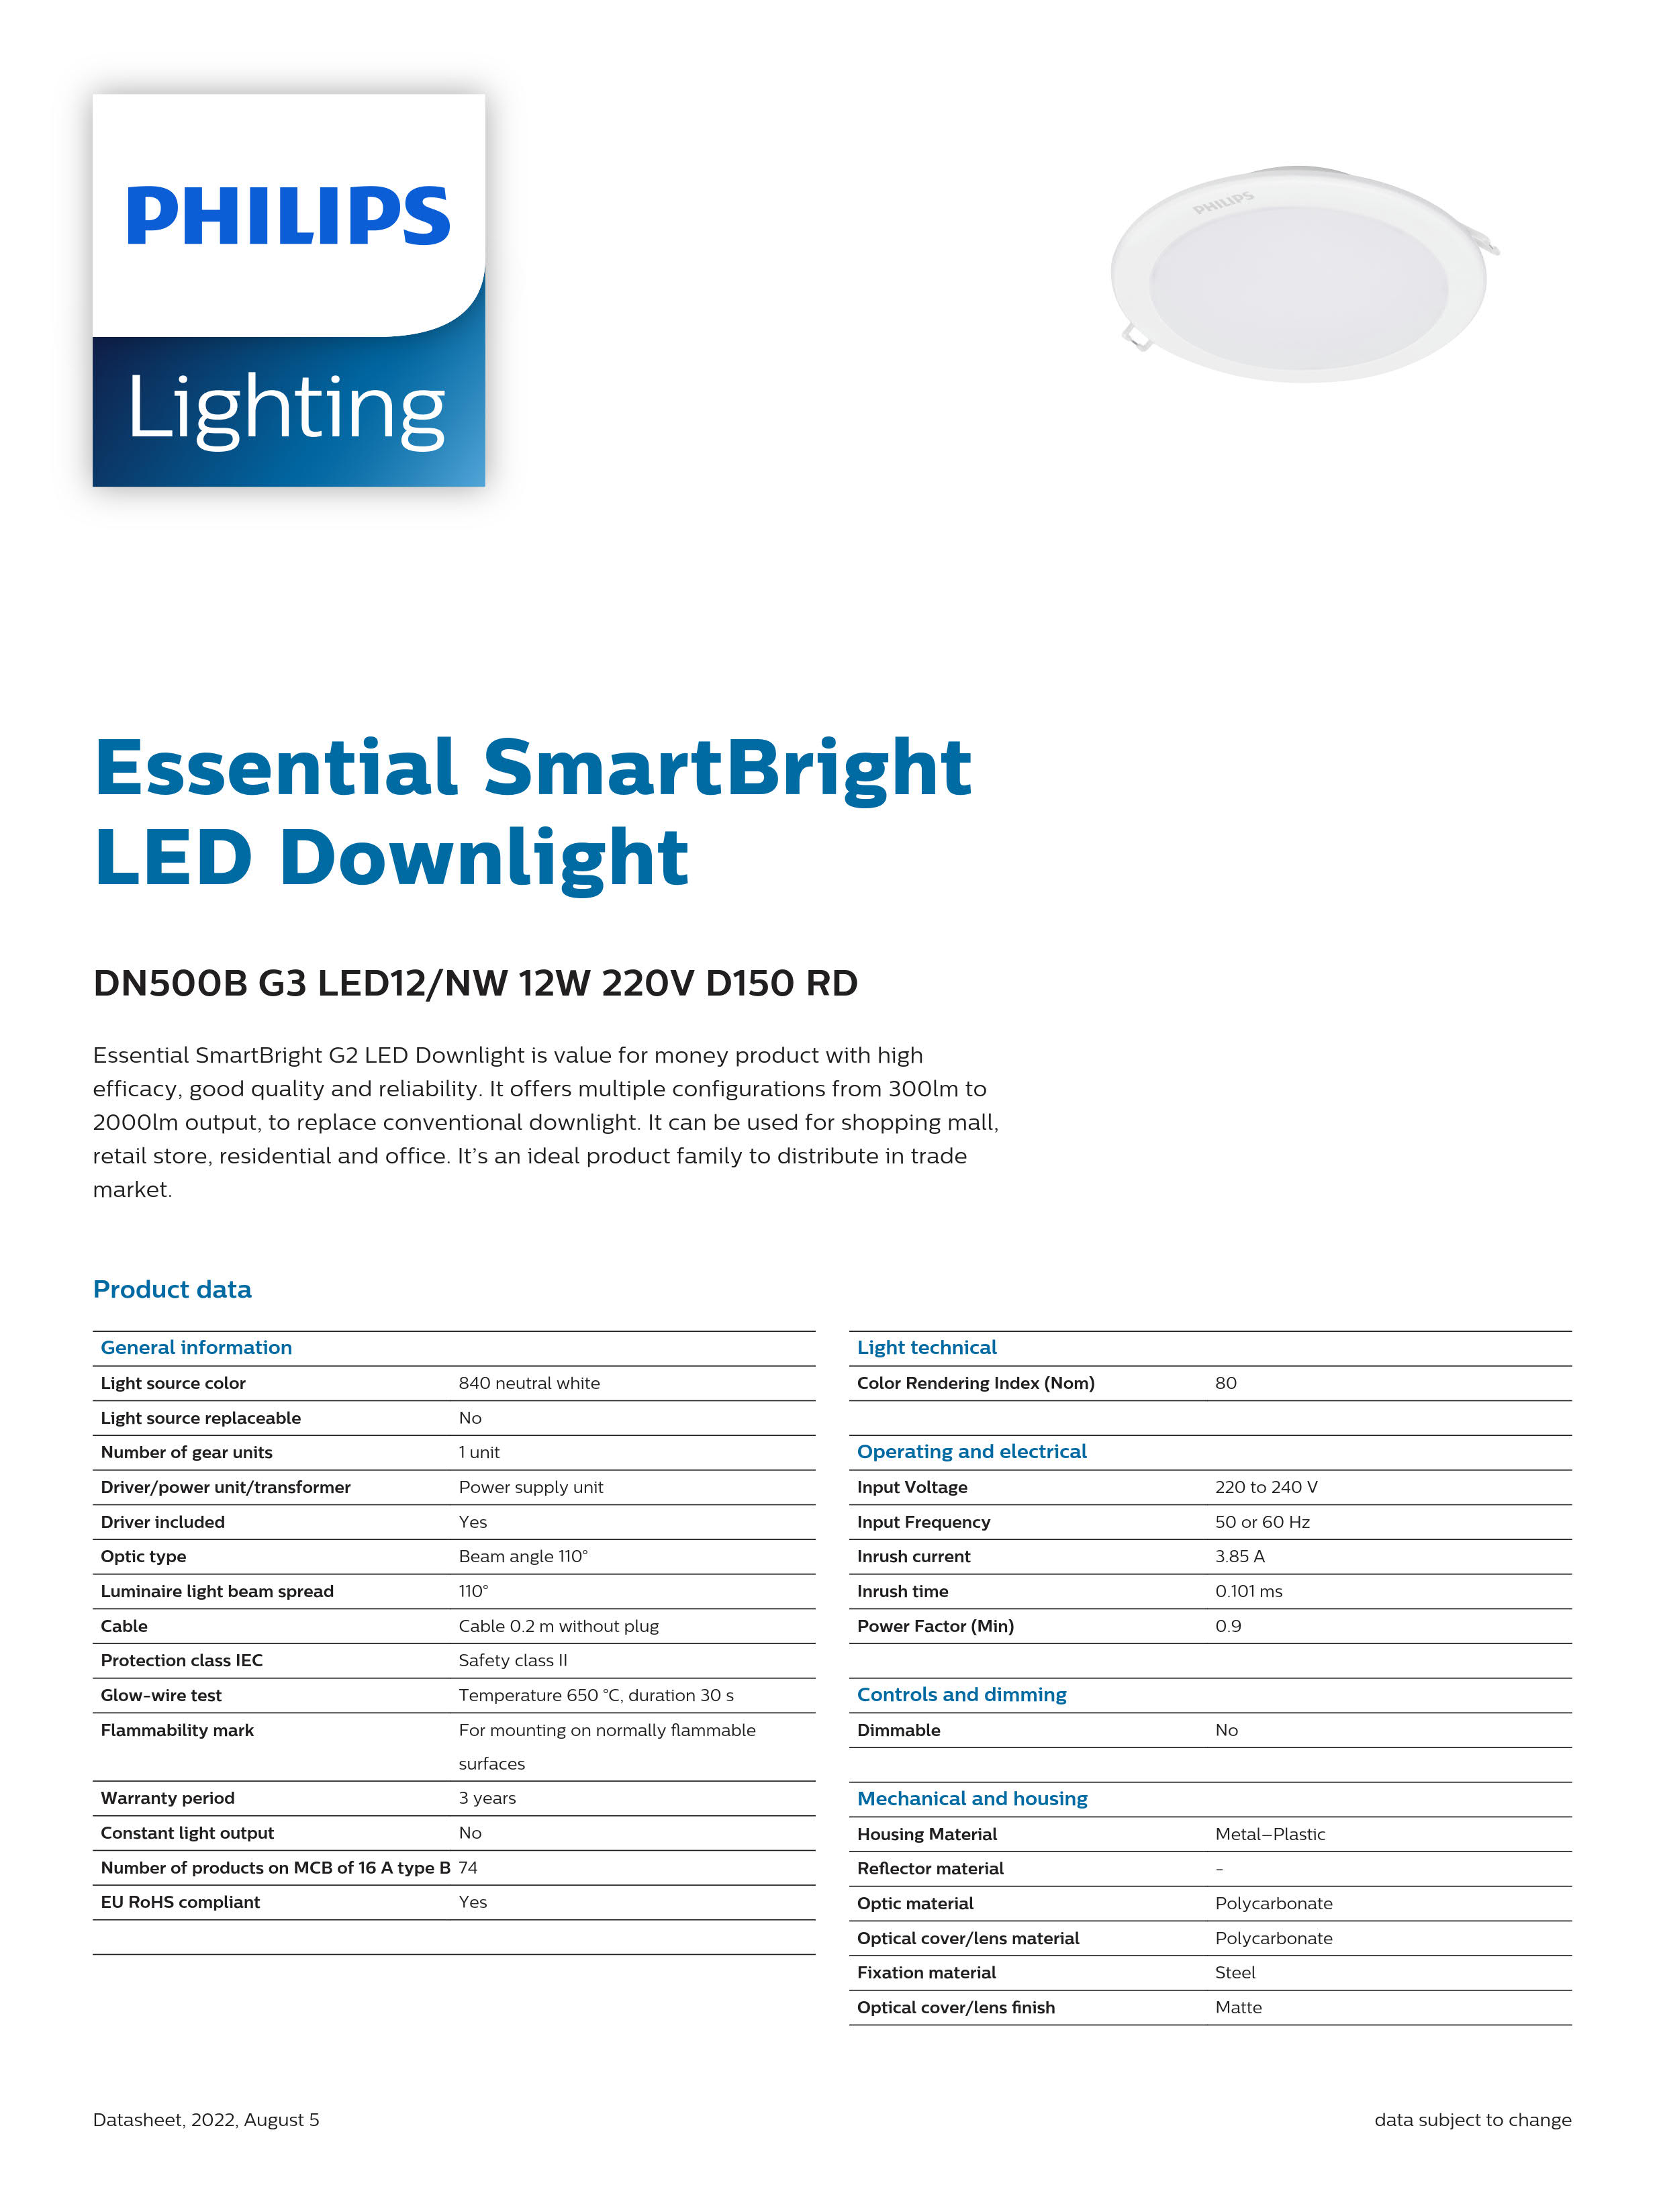 PHILIPS LED downlight DN500B G3 LED12/NW 12W 220V D150 RD 929002677640